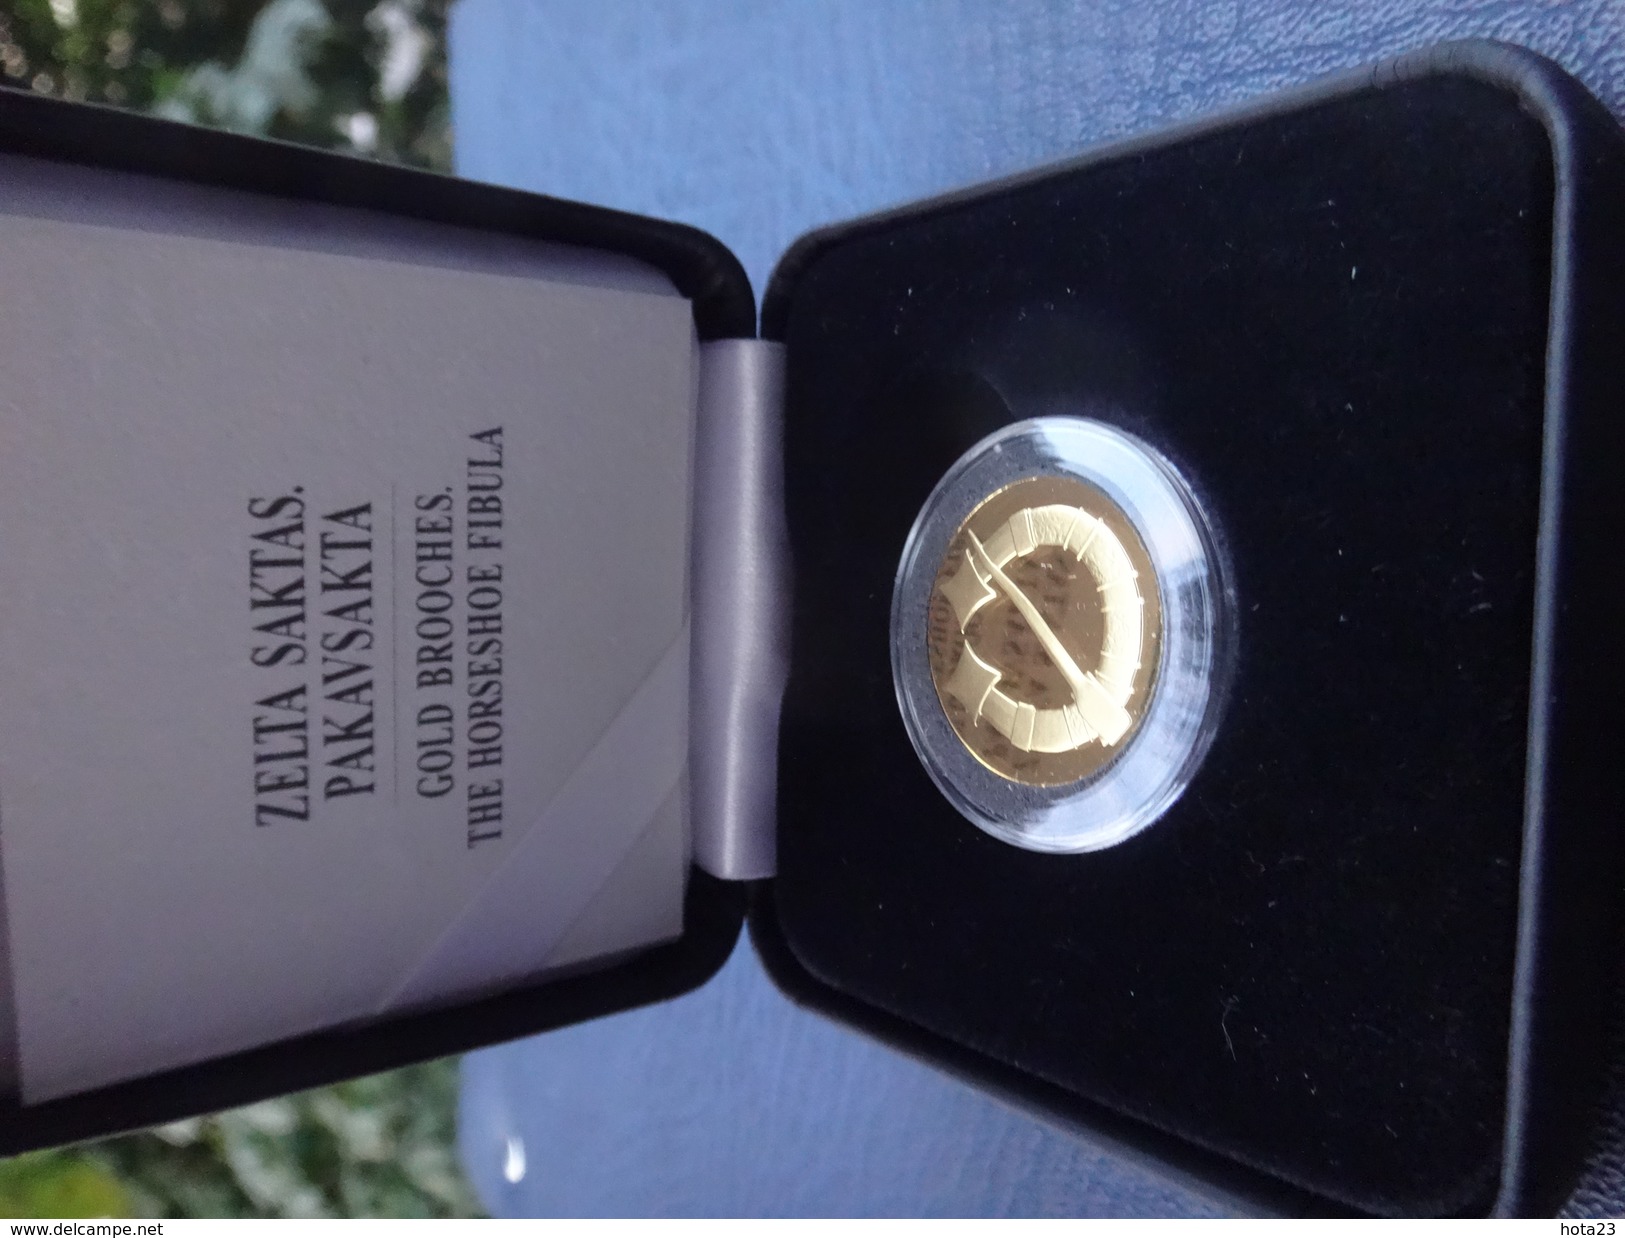 New !!! 20 Euro Gold Coin 6 Gr Latvia Lettland Brooches Horseshoe Fibula Proof 2017 - Lettland